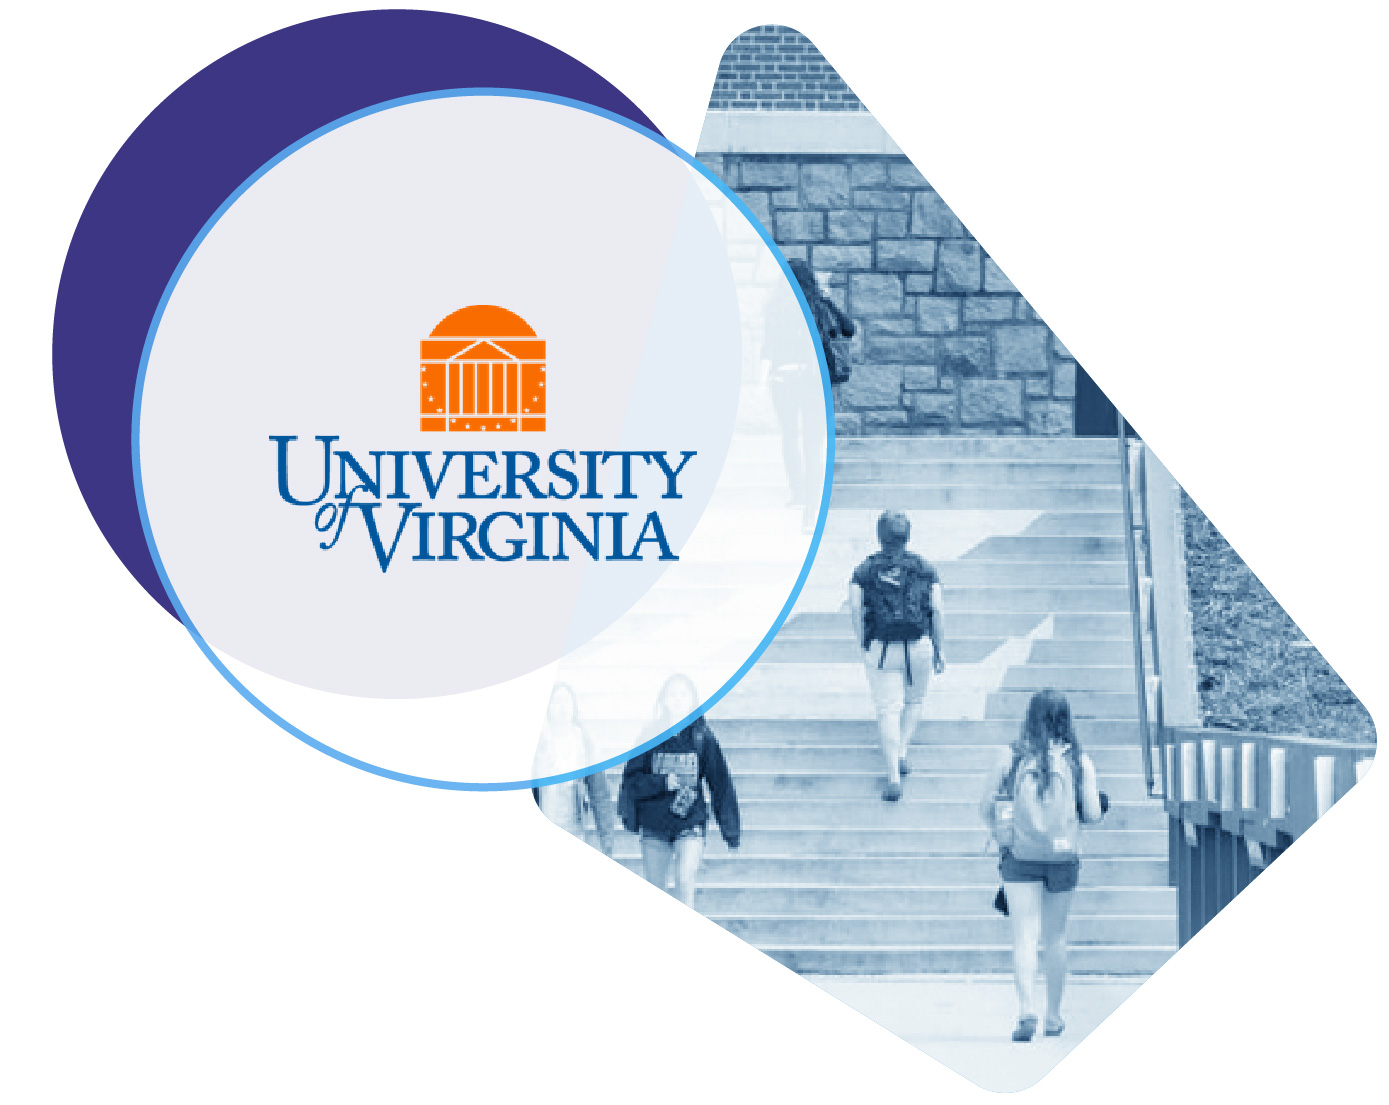 the University of Virginia logo